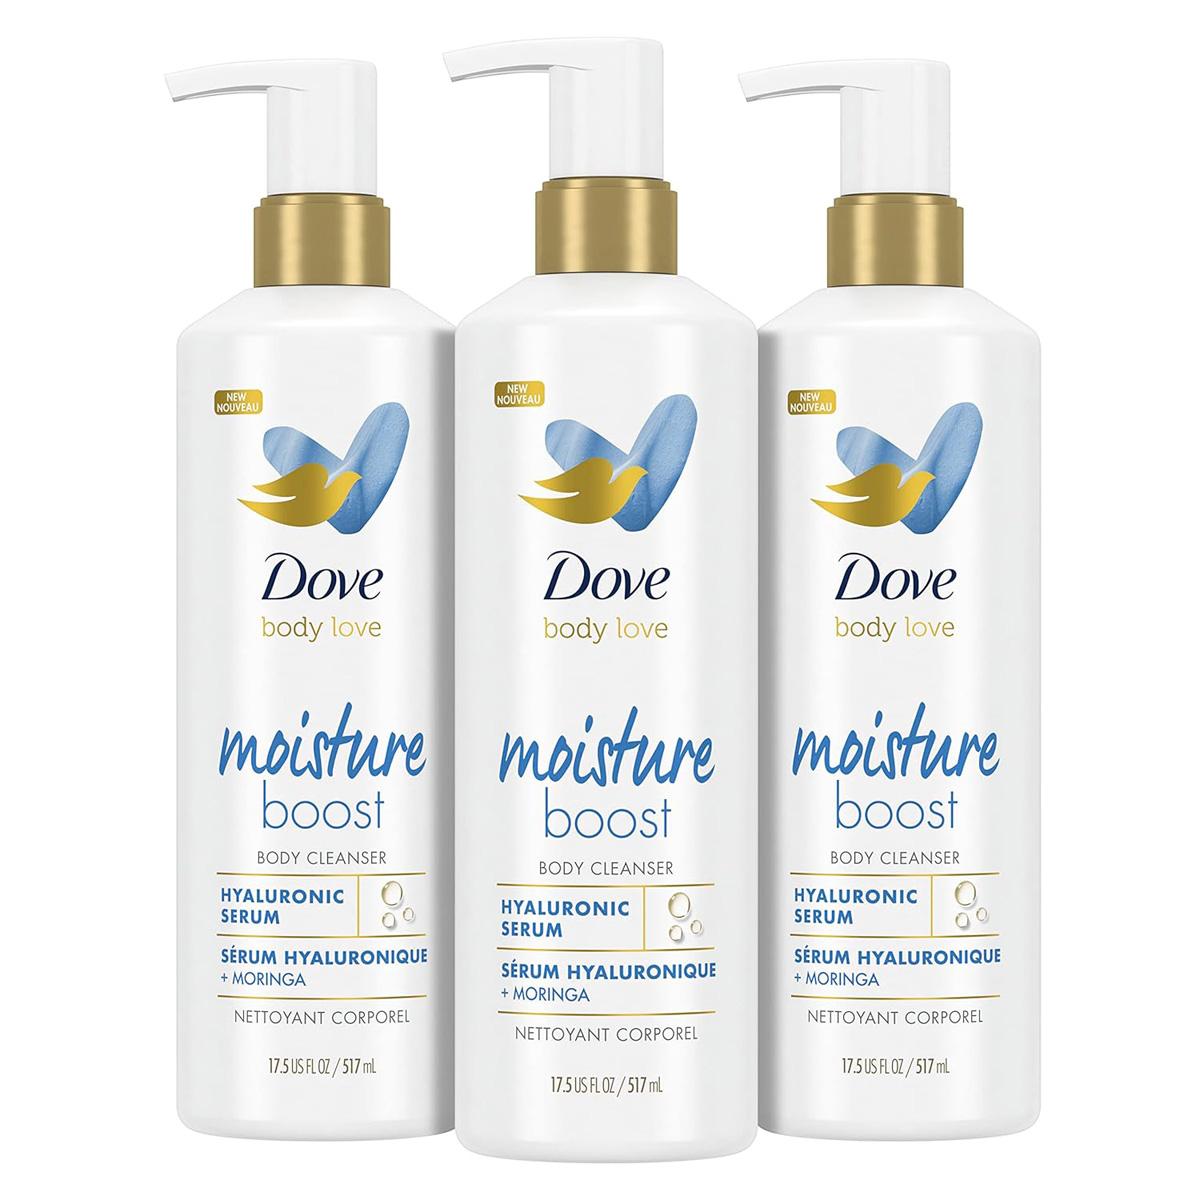 Dove Body Love Moisture Boost Body Cleanser 3 Pack for $10.03